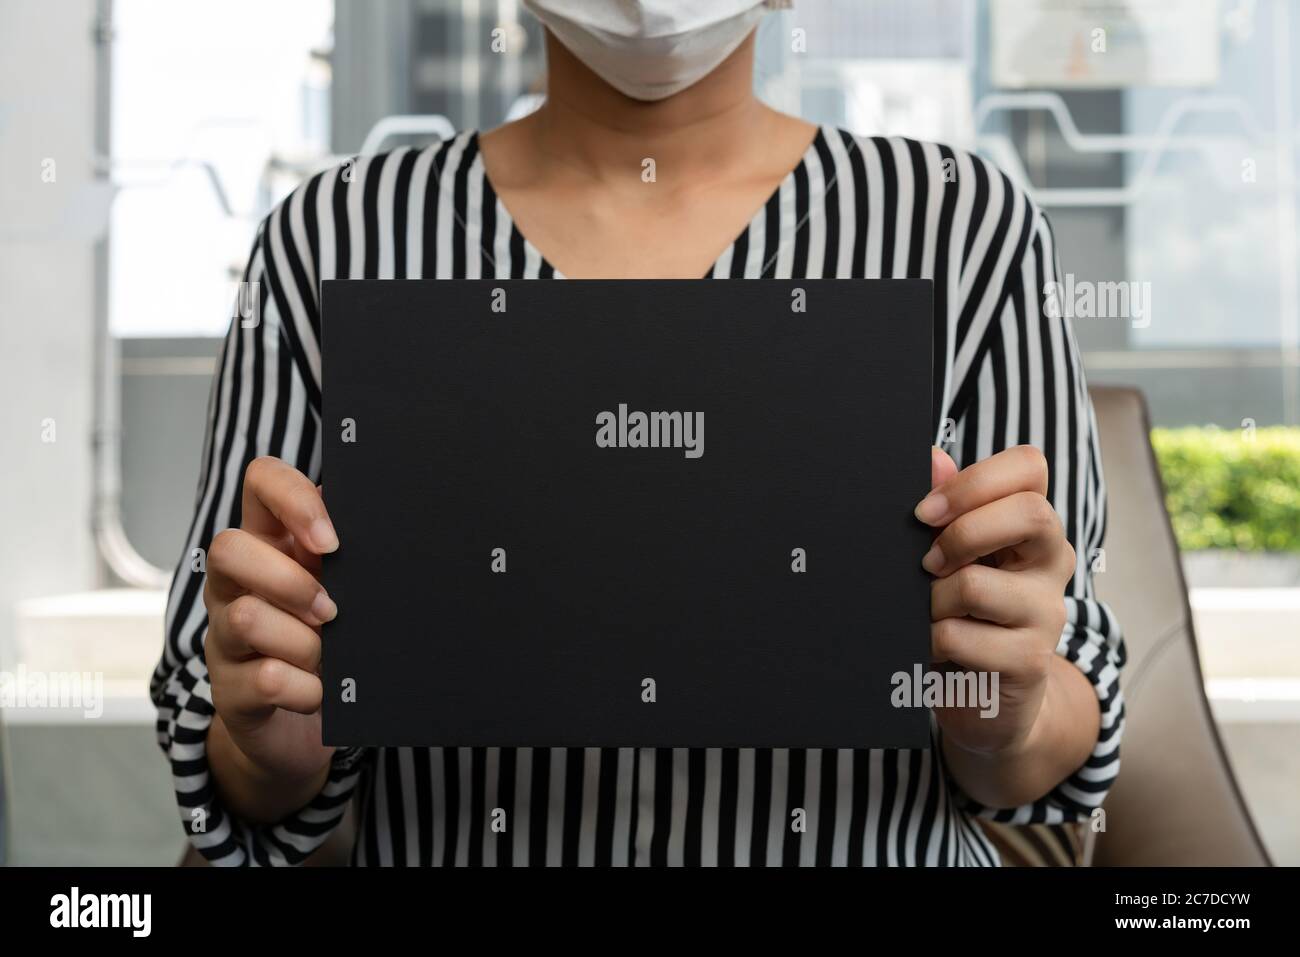 Female employee holding black chalk board sign wearing formal business attire Stock Photo